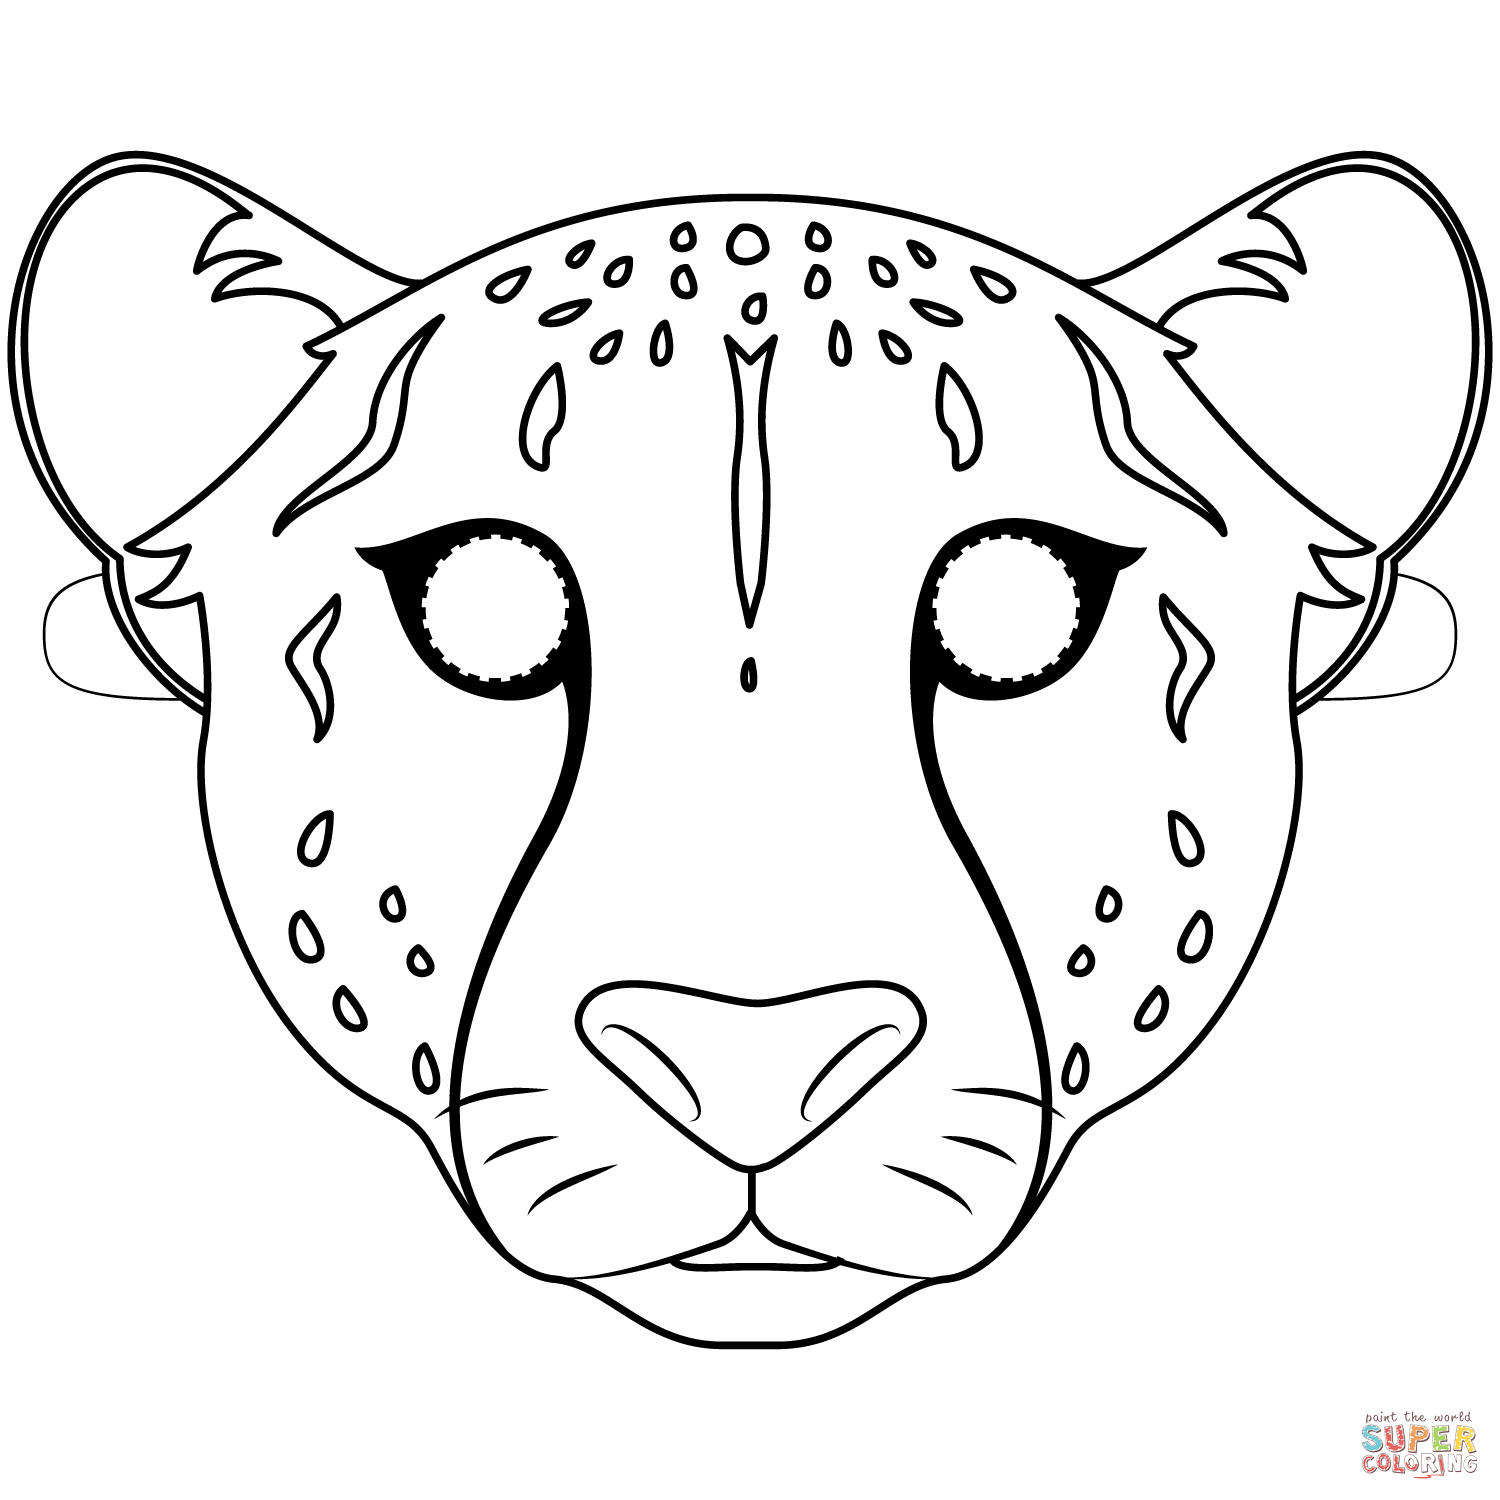 Cheetah mask coloring page free printable coloring pages printable coloring masks animal coloring pages printable animal masks